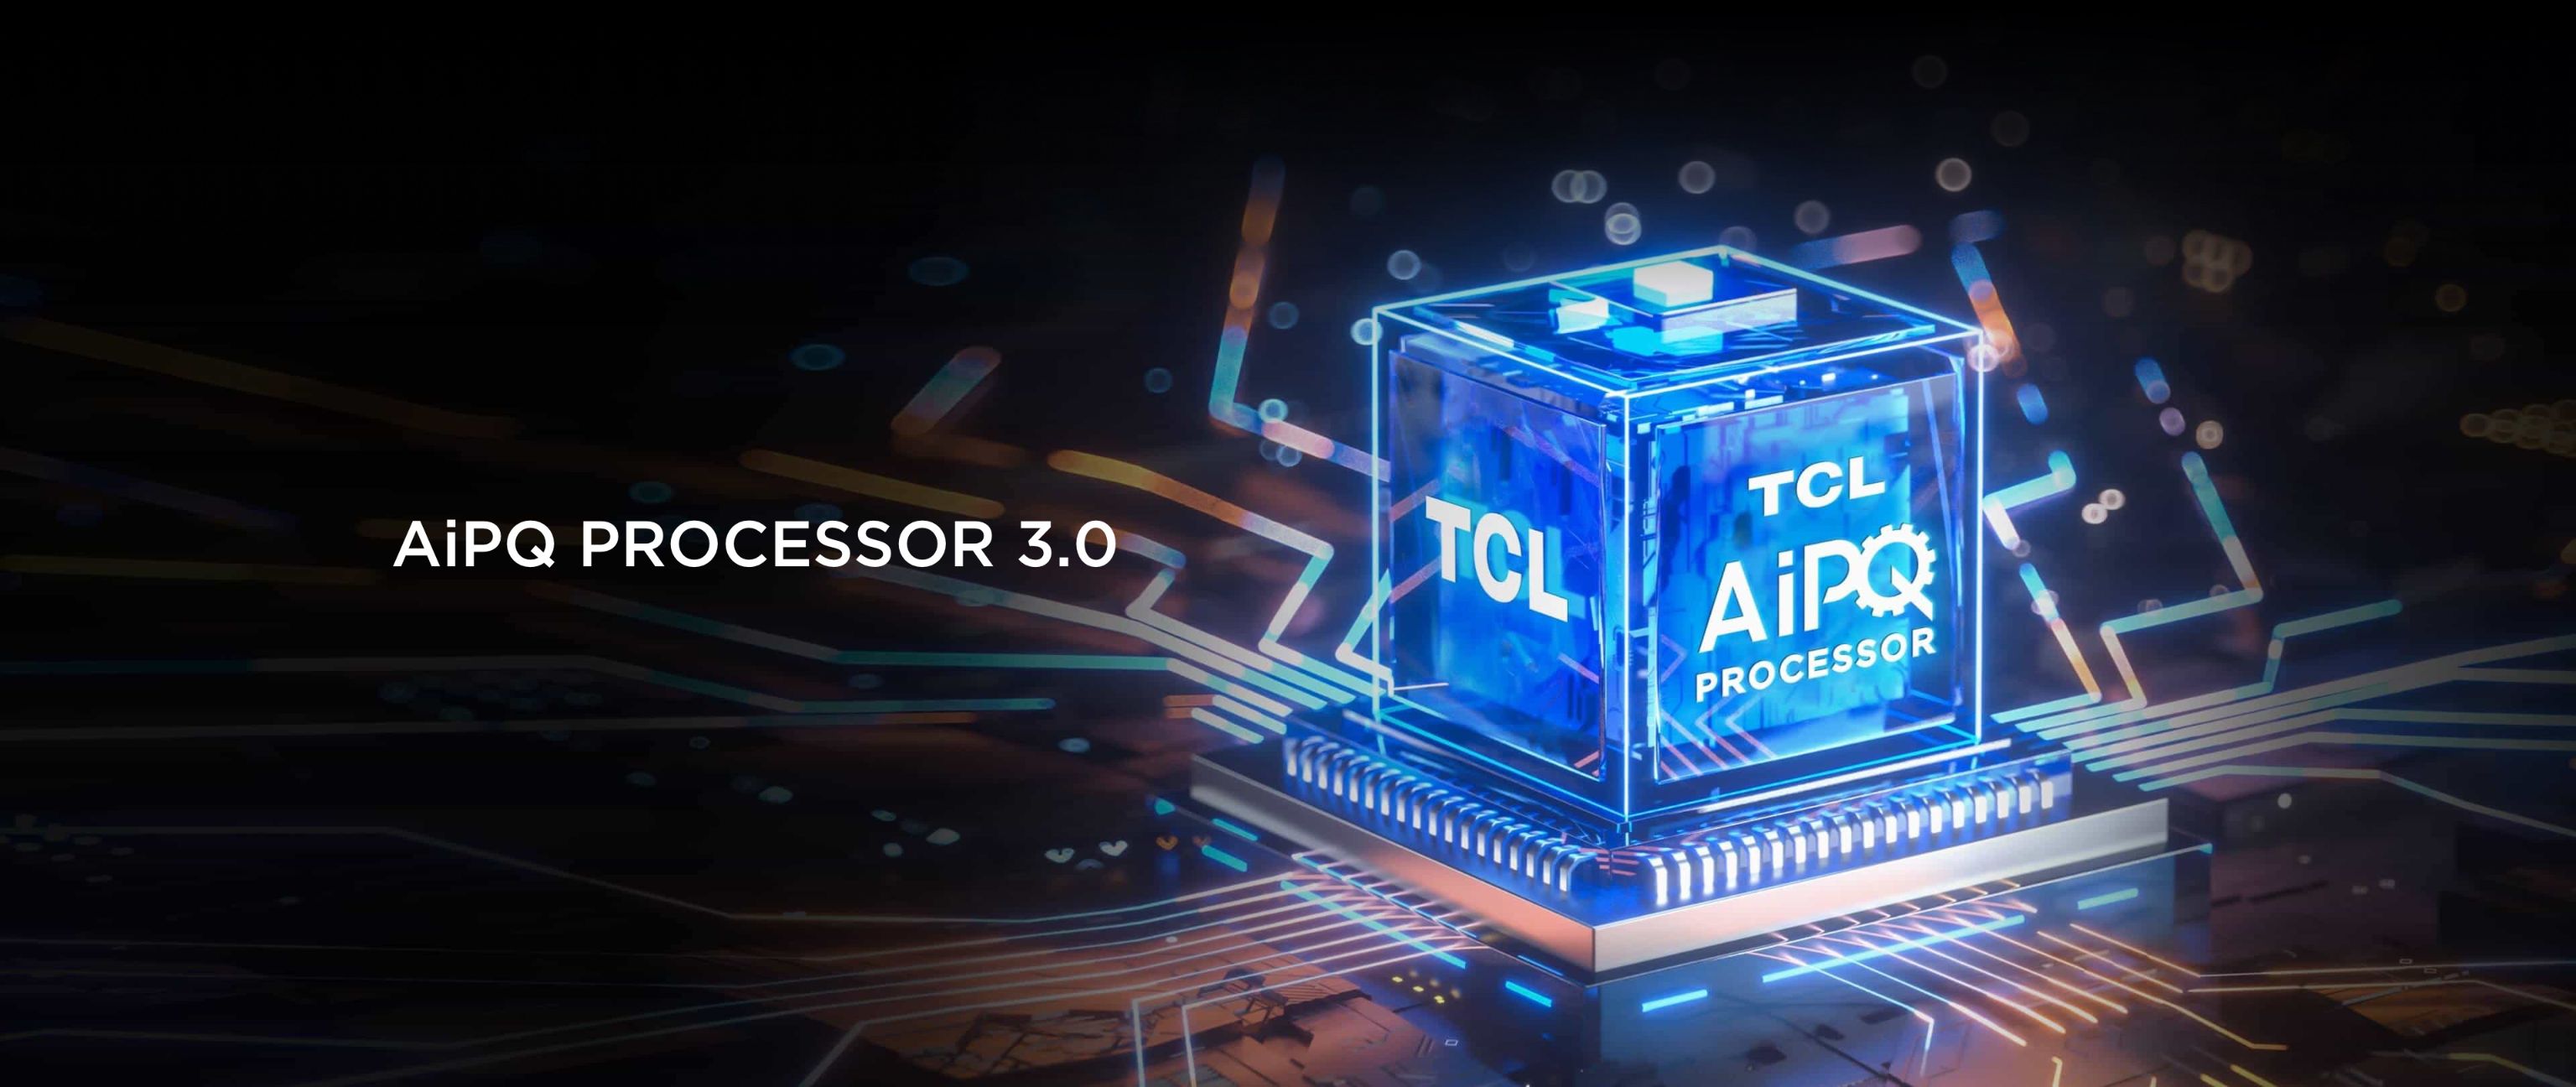 AiPQ Processor 3.0